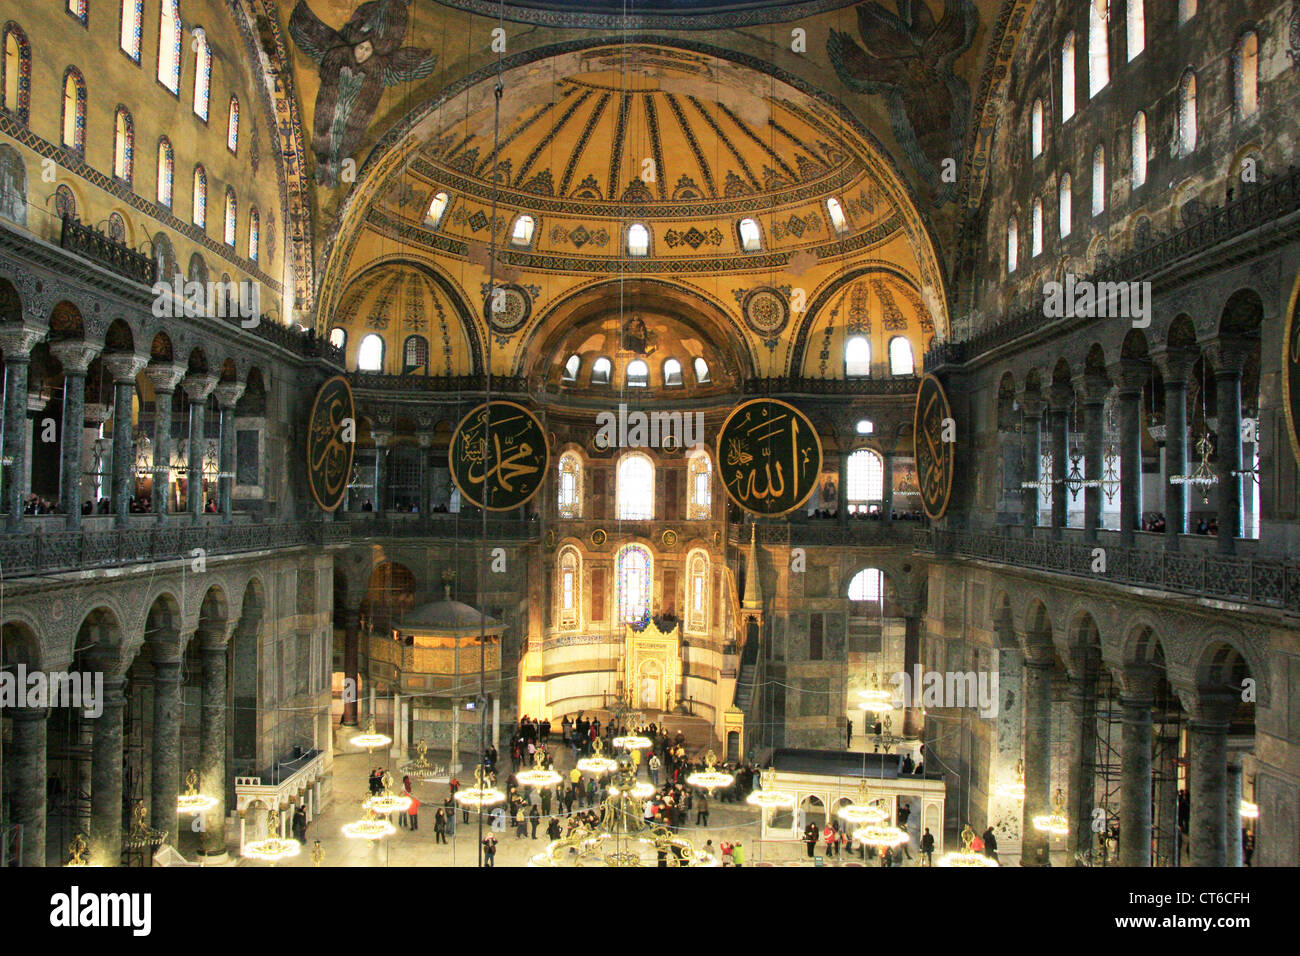 The Nave, Hagia Sophia, Sultanahmet, Istanbul, Turkey Stock Photo